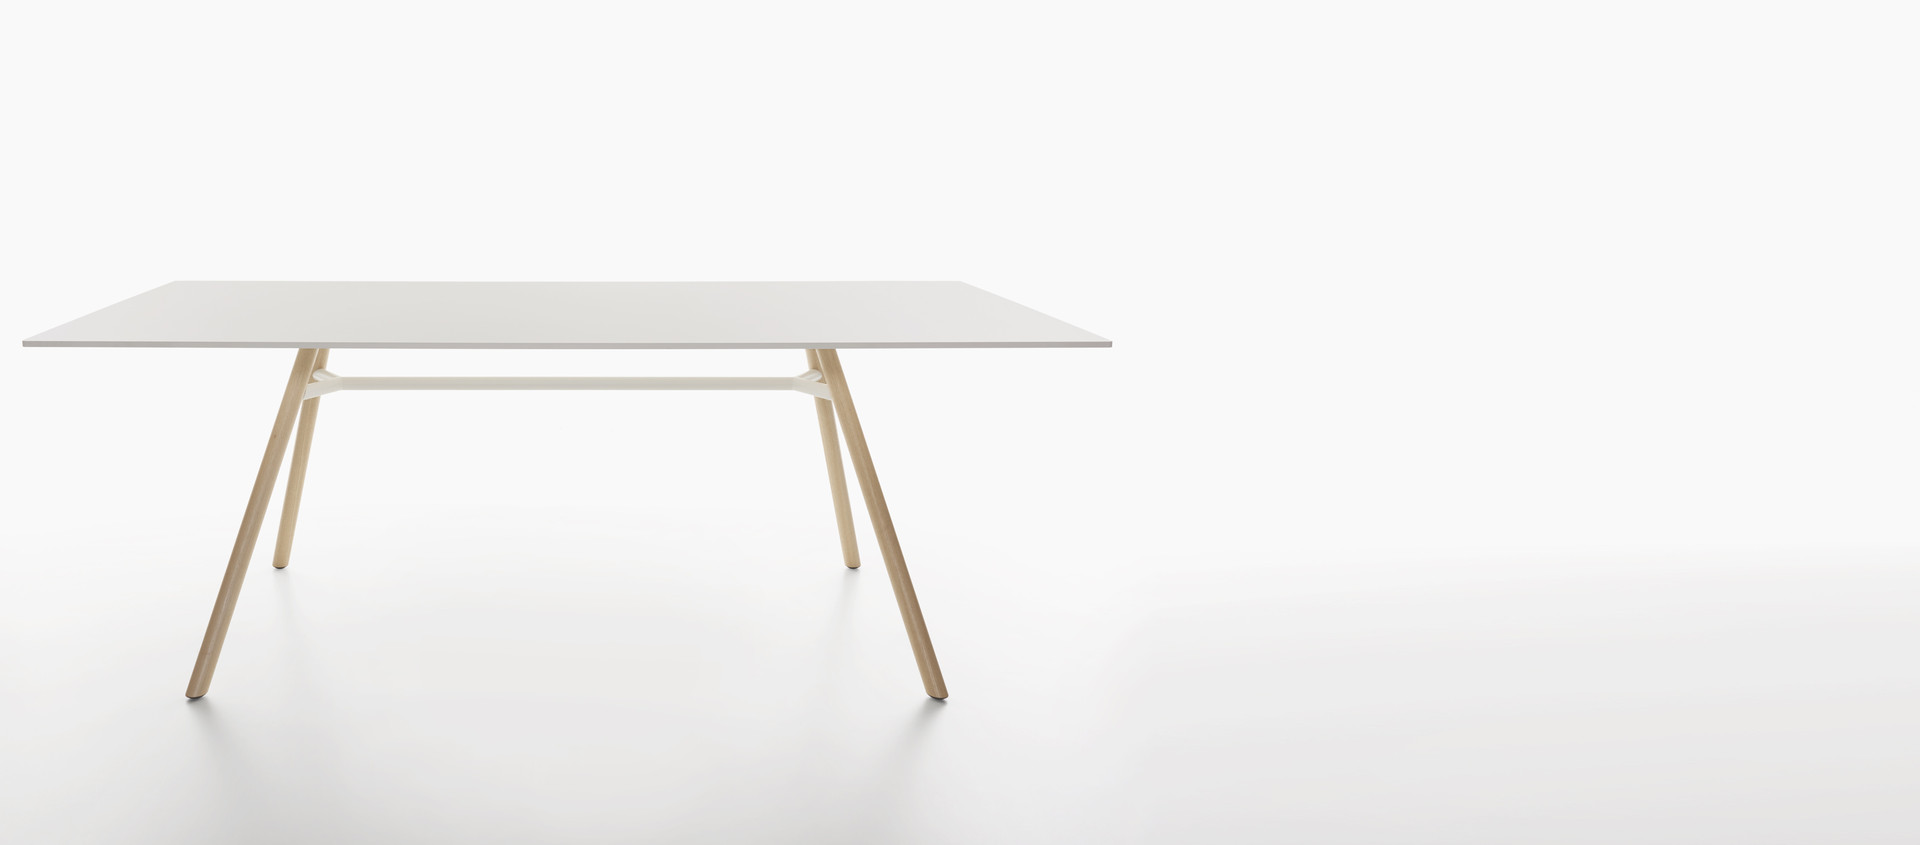 HERO - Plank, MART table, rectangular table top